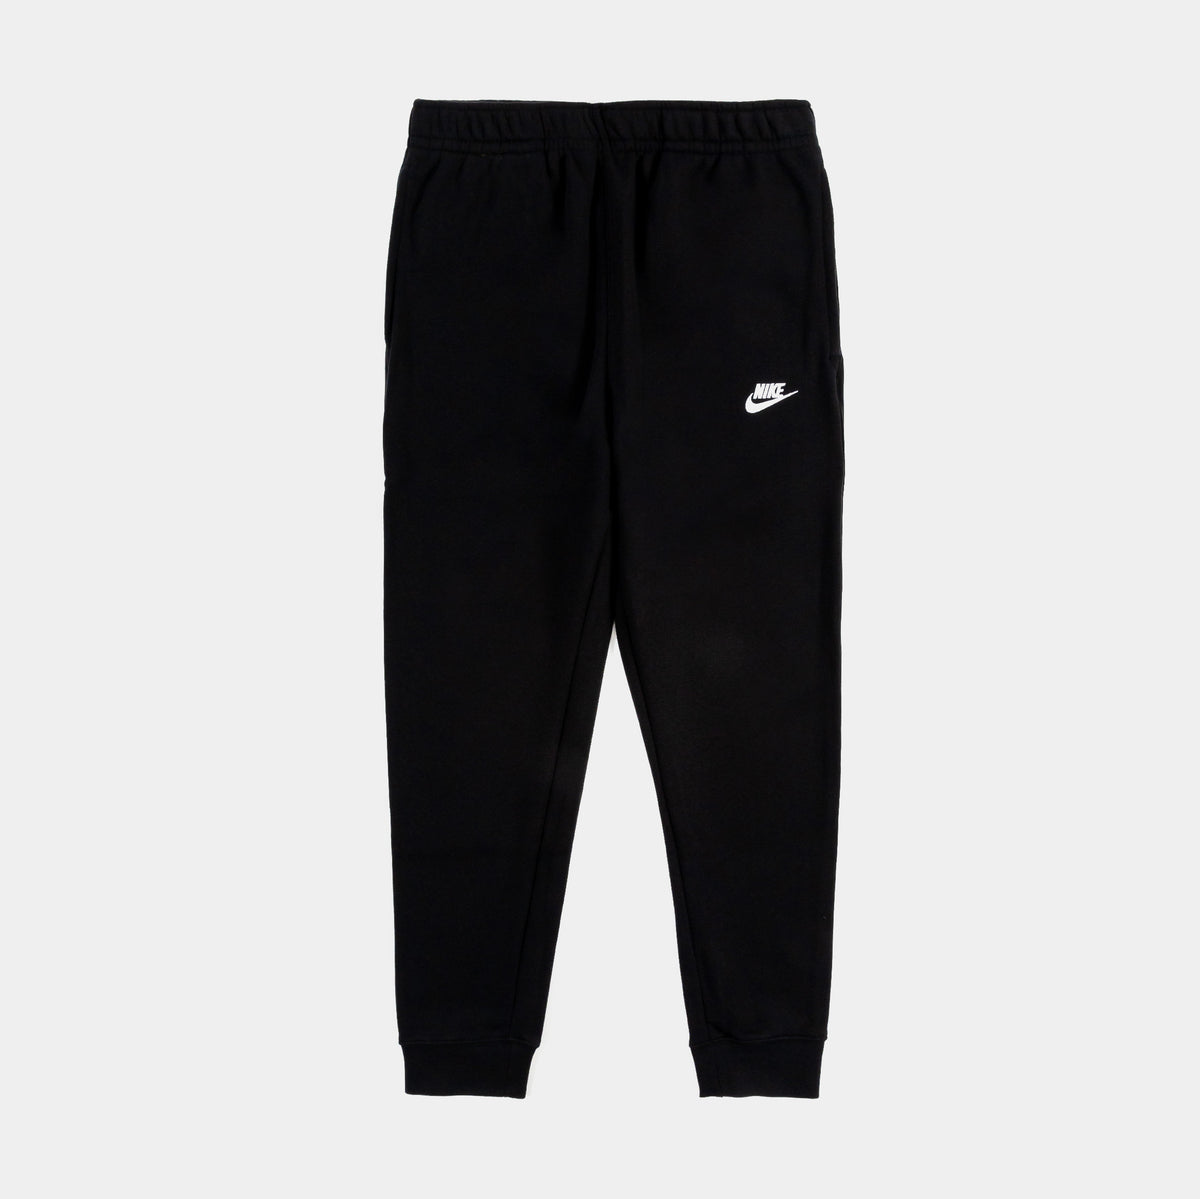 Fleece Palace Nike Mens Shoe – Sportswear Joggers Club Pants BV2671-010 Black